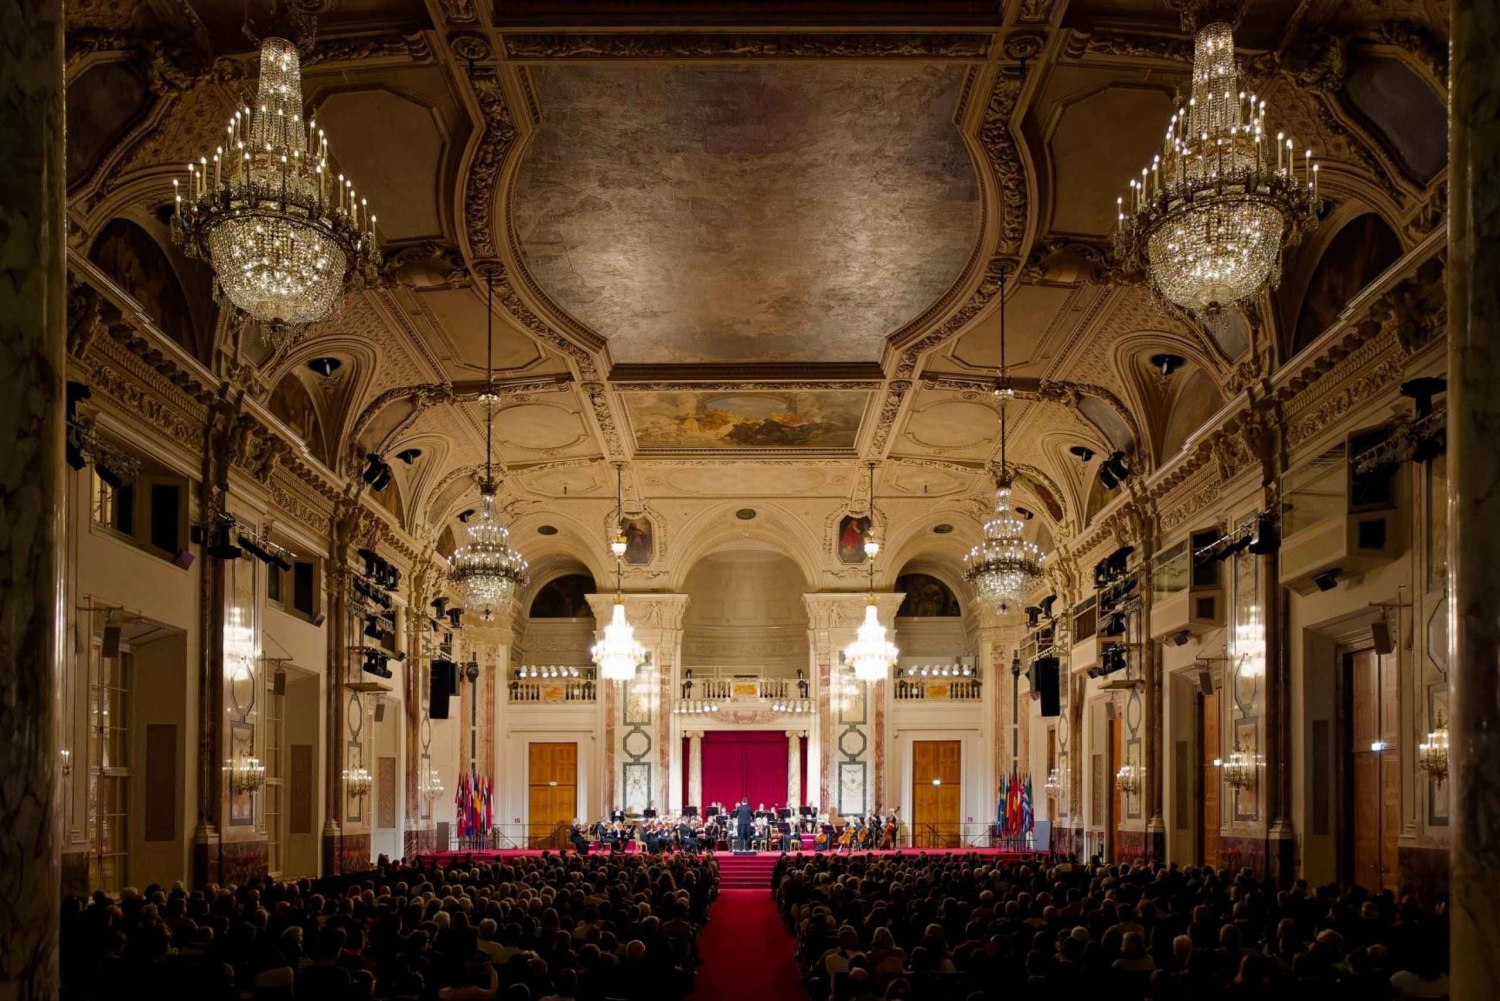 Wien: Straussin ja Mozartin konsertti Hofburgin palatsissa